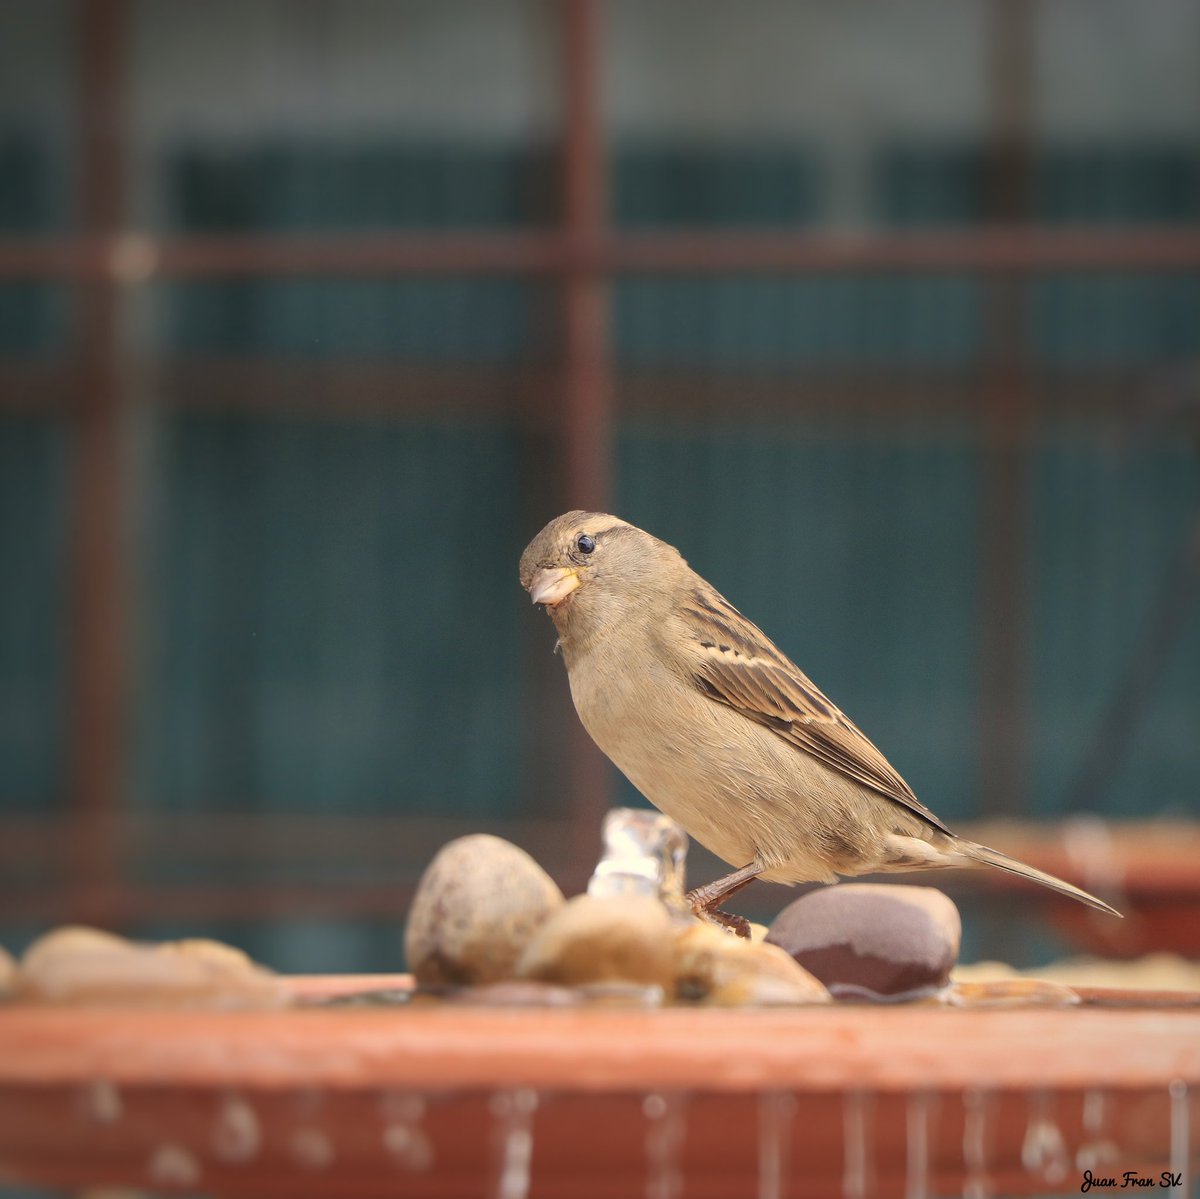 HeMBRa De GoRRióN CoMúN..!!
#pajarosextremadura #avifauna #naturextremadura #aves #pajaros #birds #ornitologia #canonphotography #naturaphotography